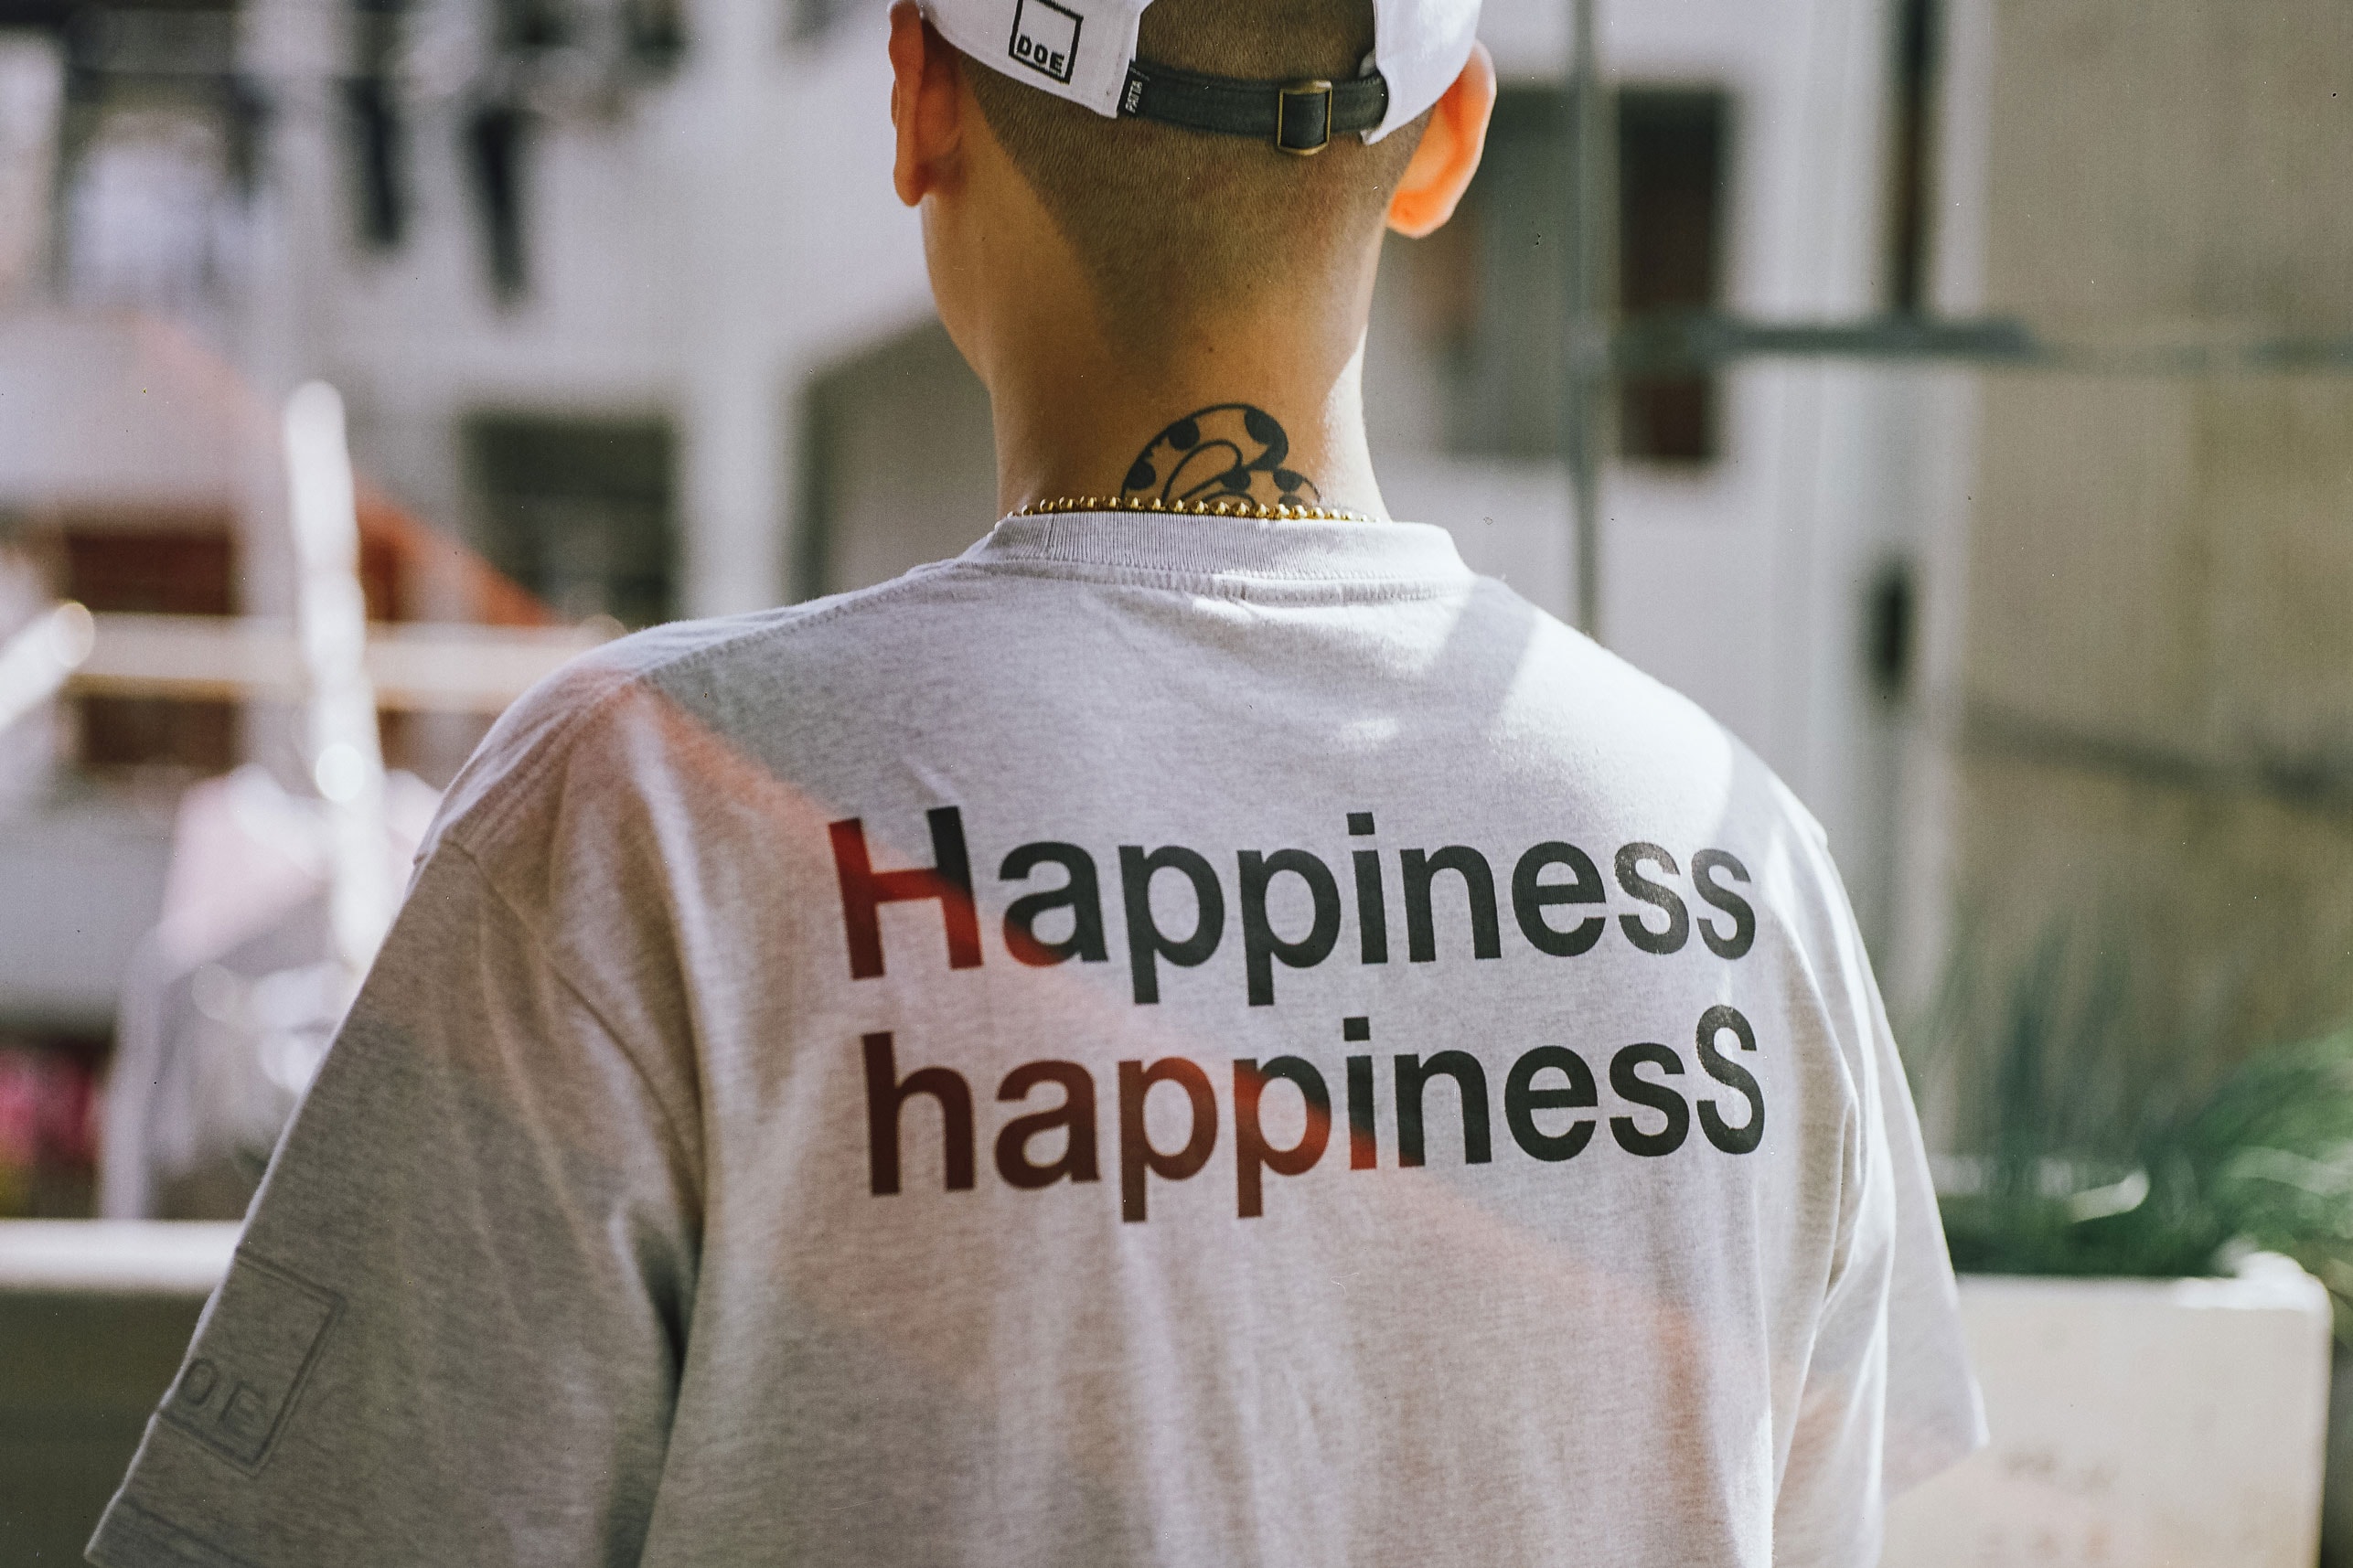 DOE x Patta 2019 全新「Double Happiness」聯乘系列發佈